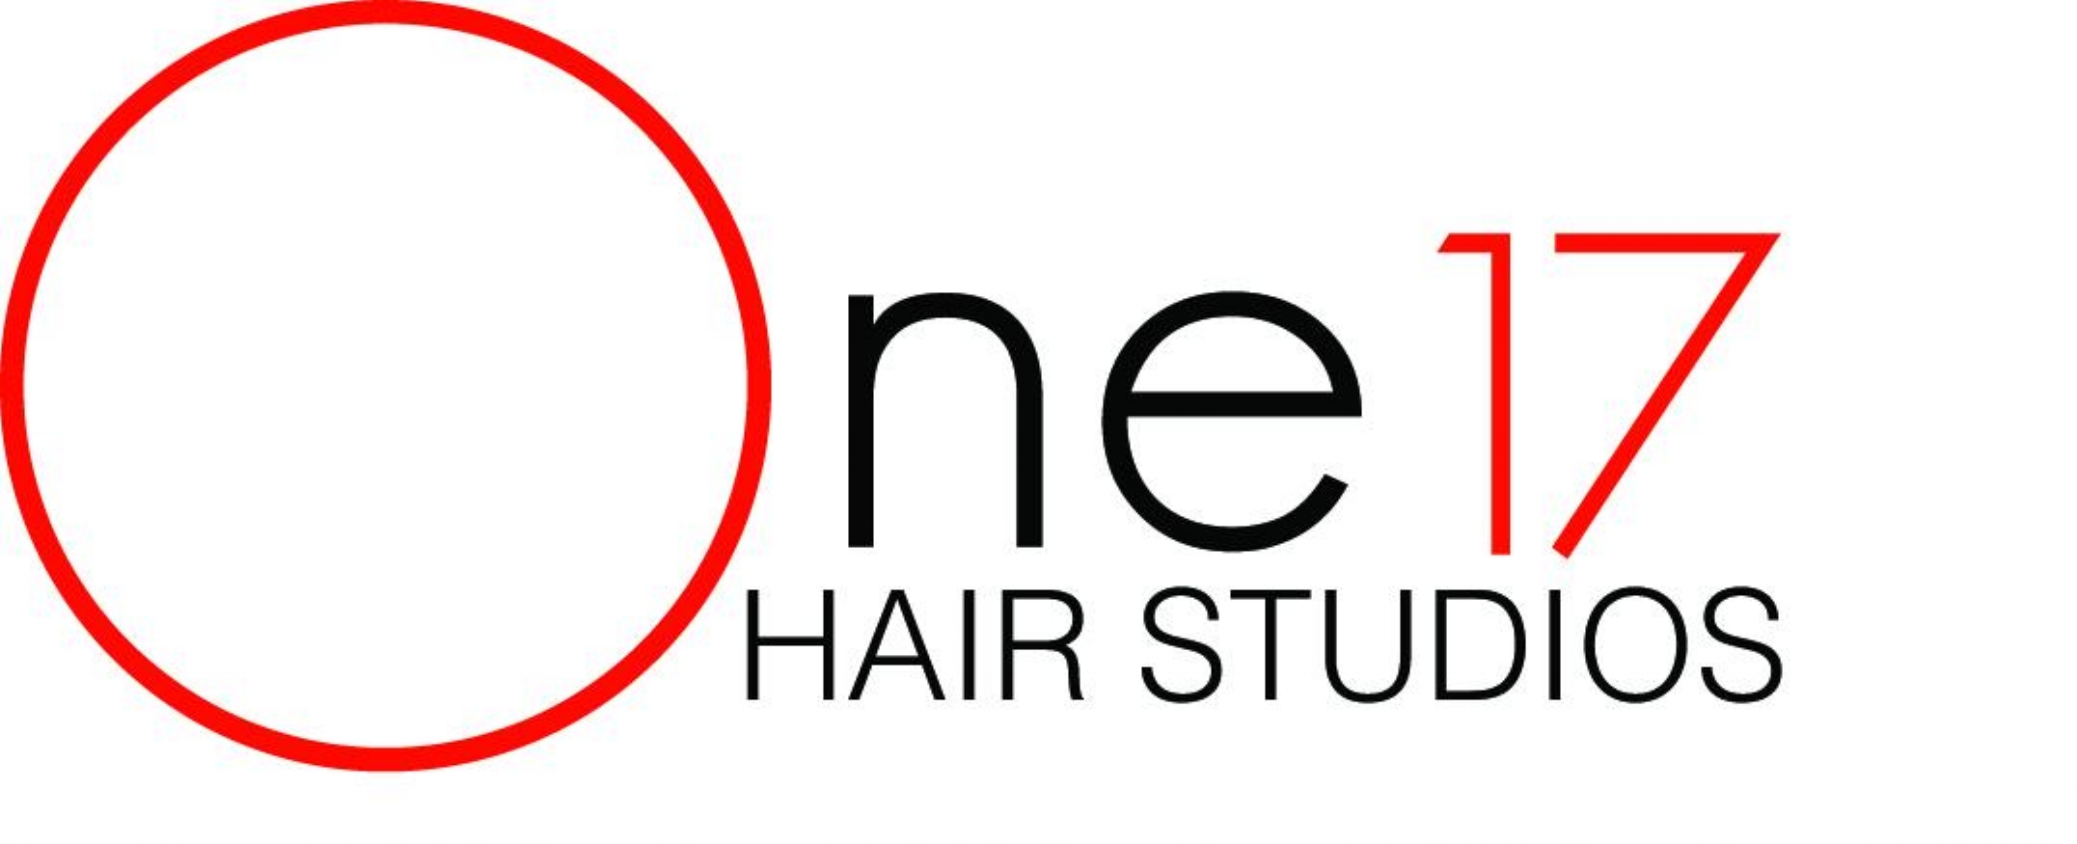 one 17 hair studios